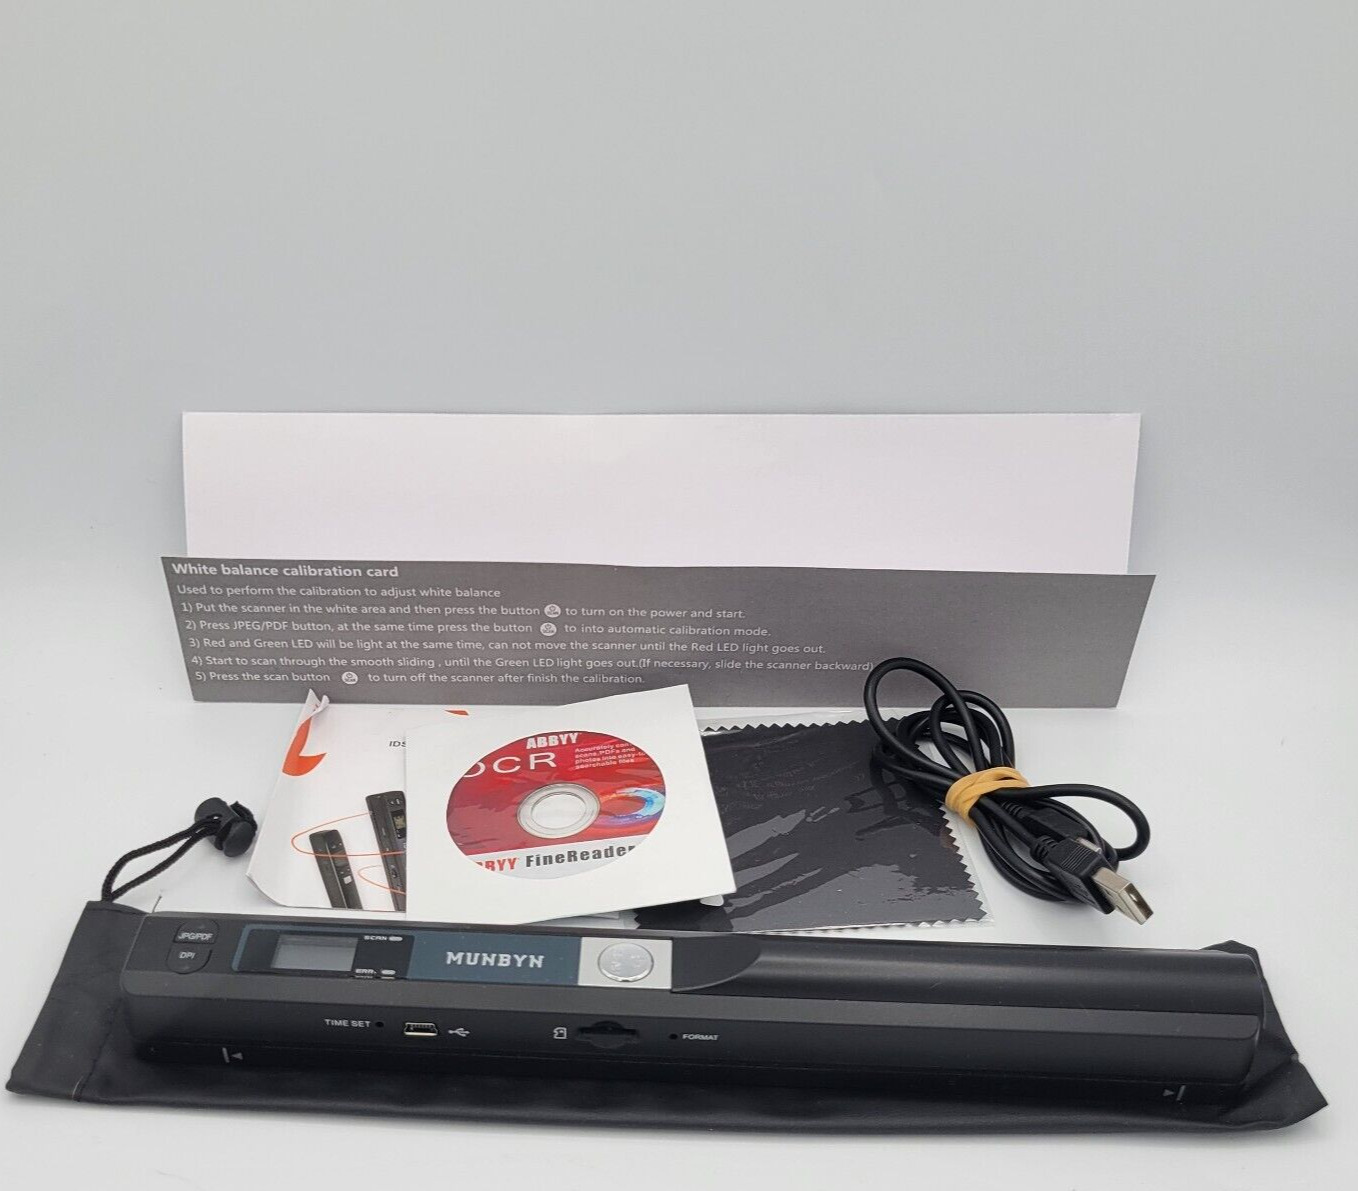 Munbyn Wand Portable Scanner MU-IDS001-Bk Black